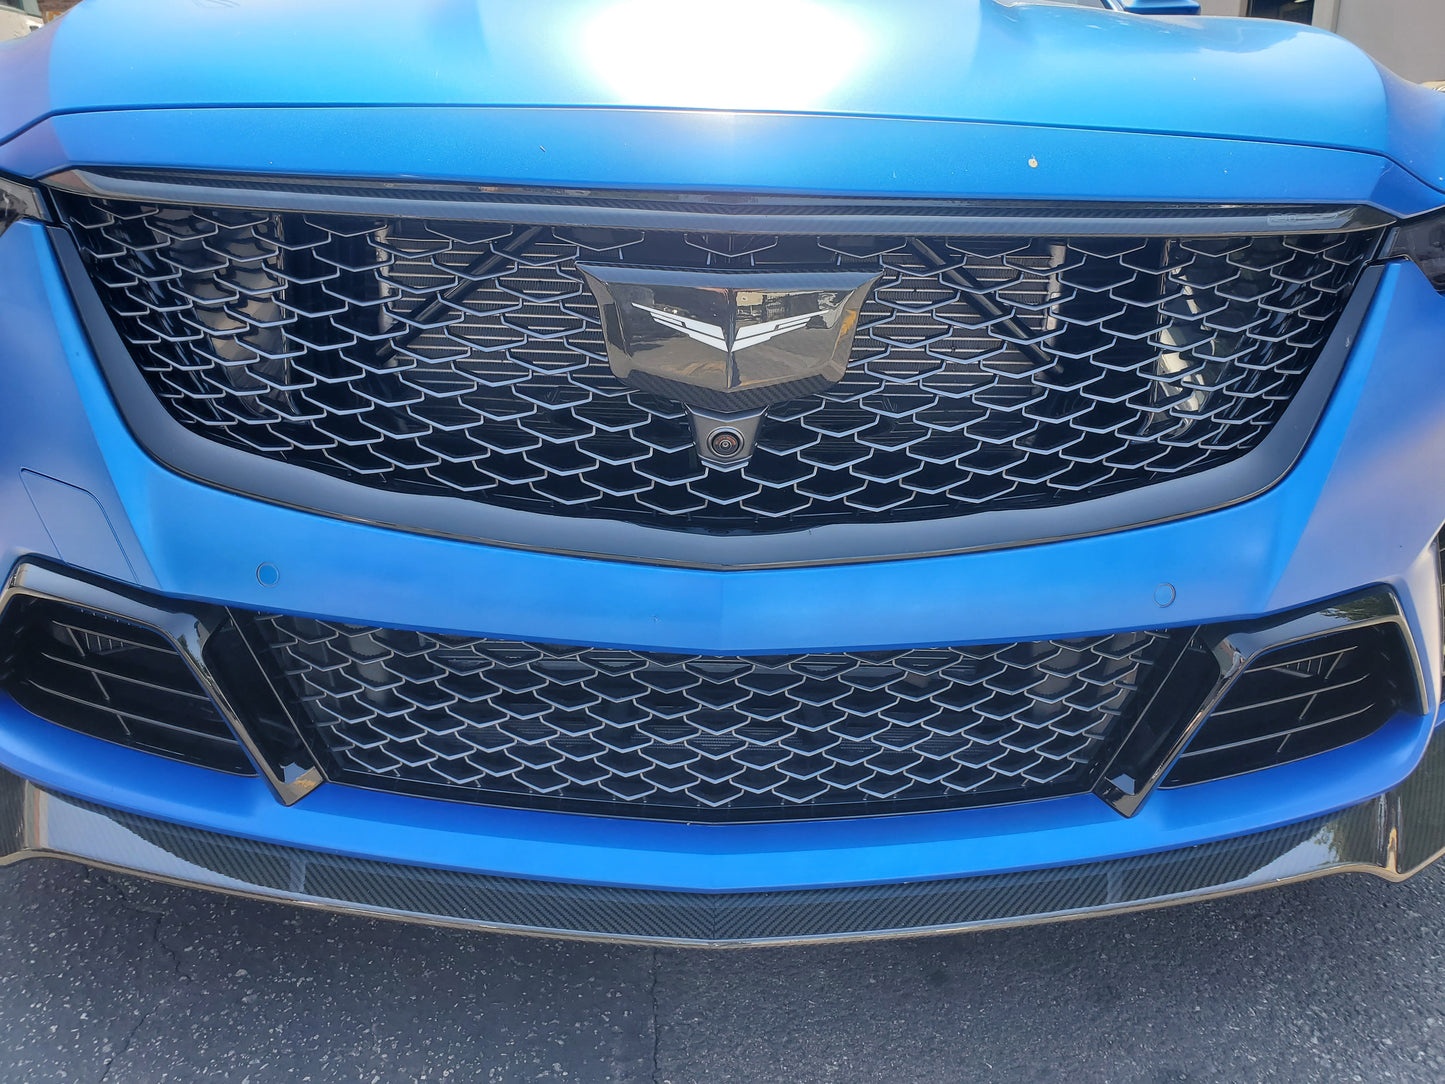 CT5-V Blackwing Front, Rear & Steering Wheel Genuine Carbon Fiber "Blackwing Logo" Cadillac Shield Cover Kit